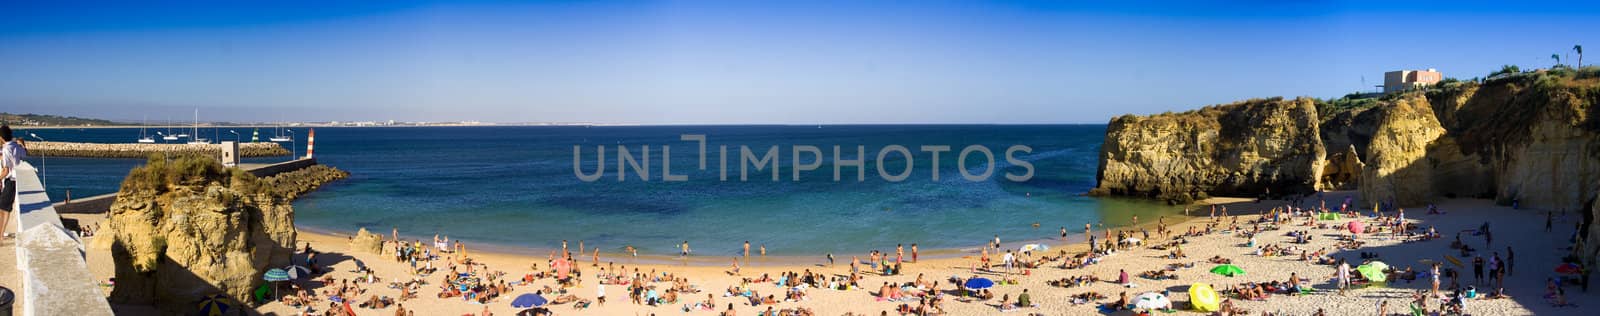 Algarve, part of Portugal, travel target, verry nice by anobis